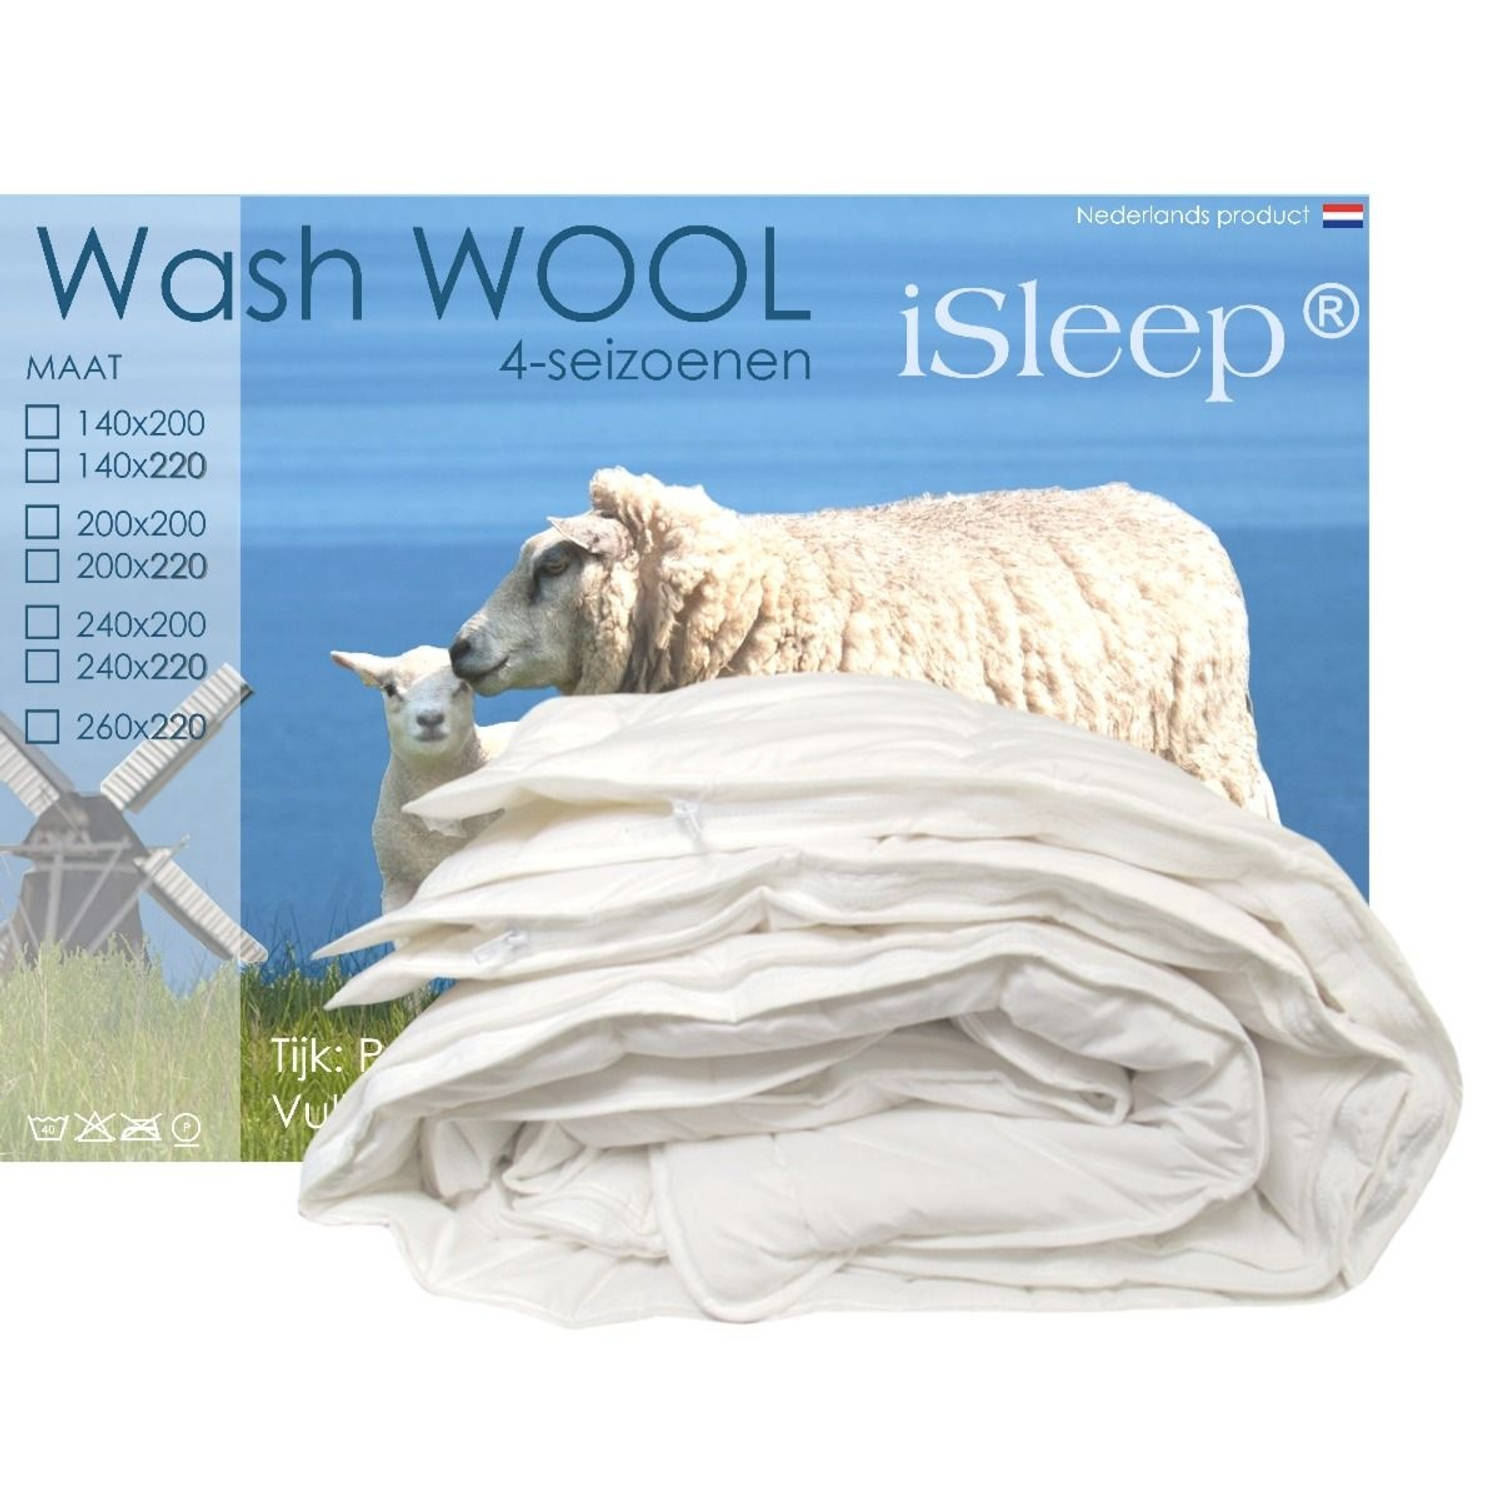 iSleep Wash Wool wollen 4-seizoenen dekbed wasbare wol 1-Persoons 140x220 cm